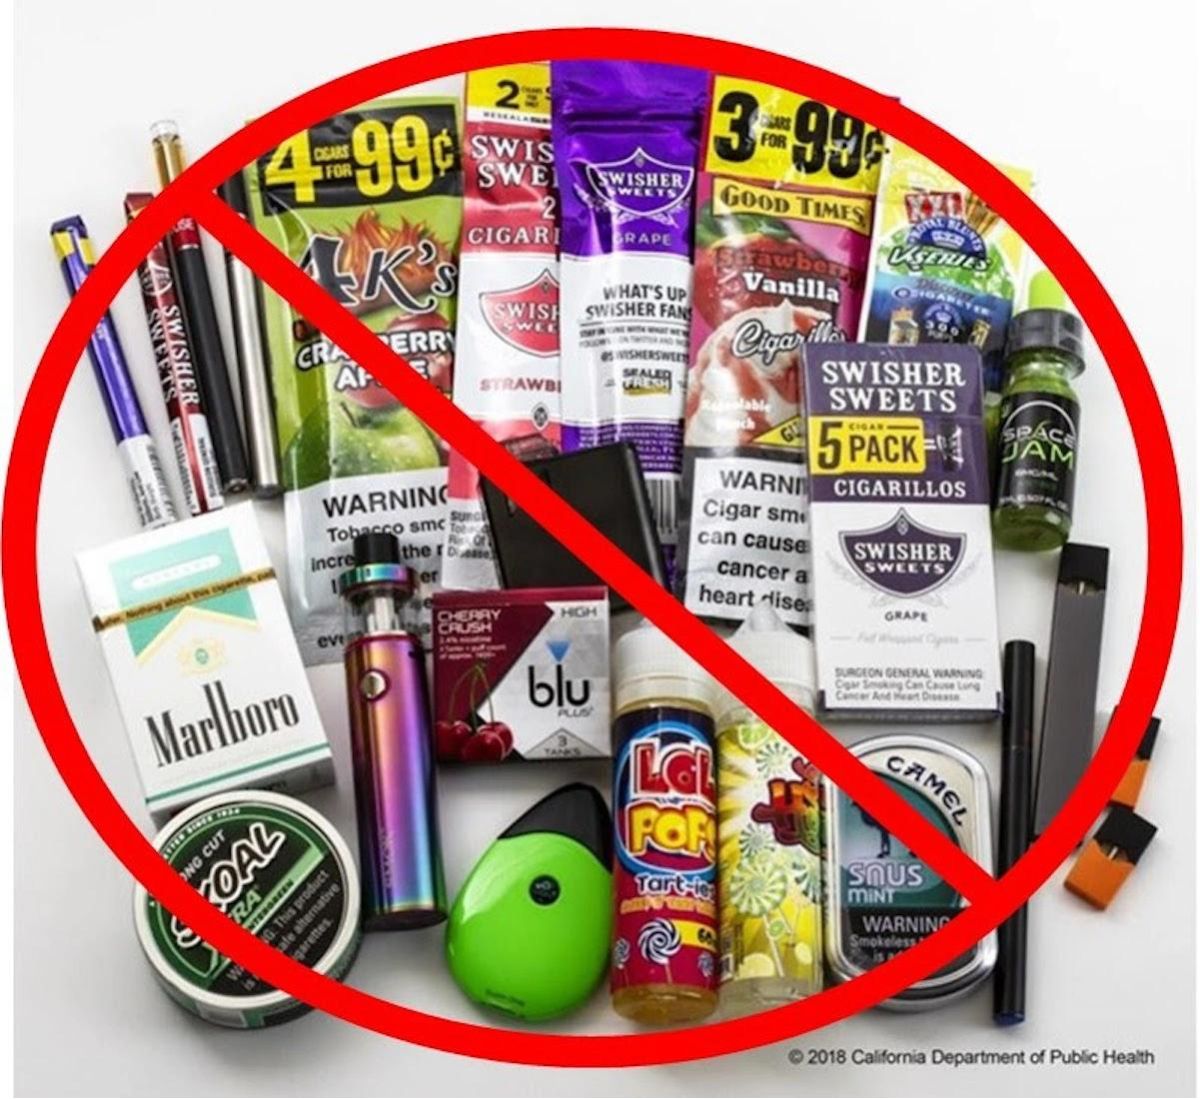 flavored-tobacco-ban-image_cdph image